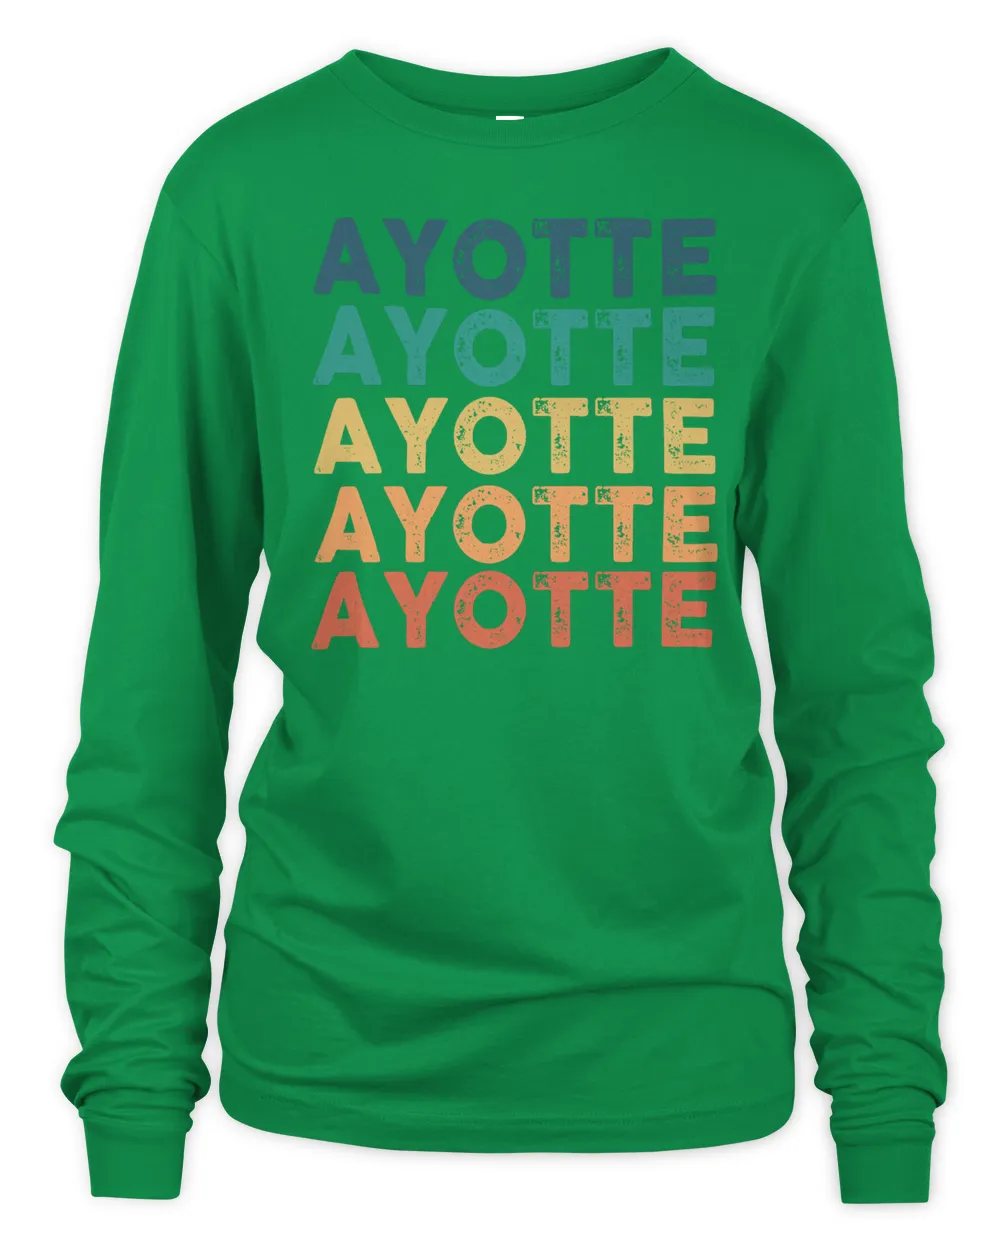 AYOTTE-NT-58-01